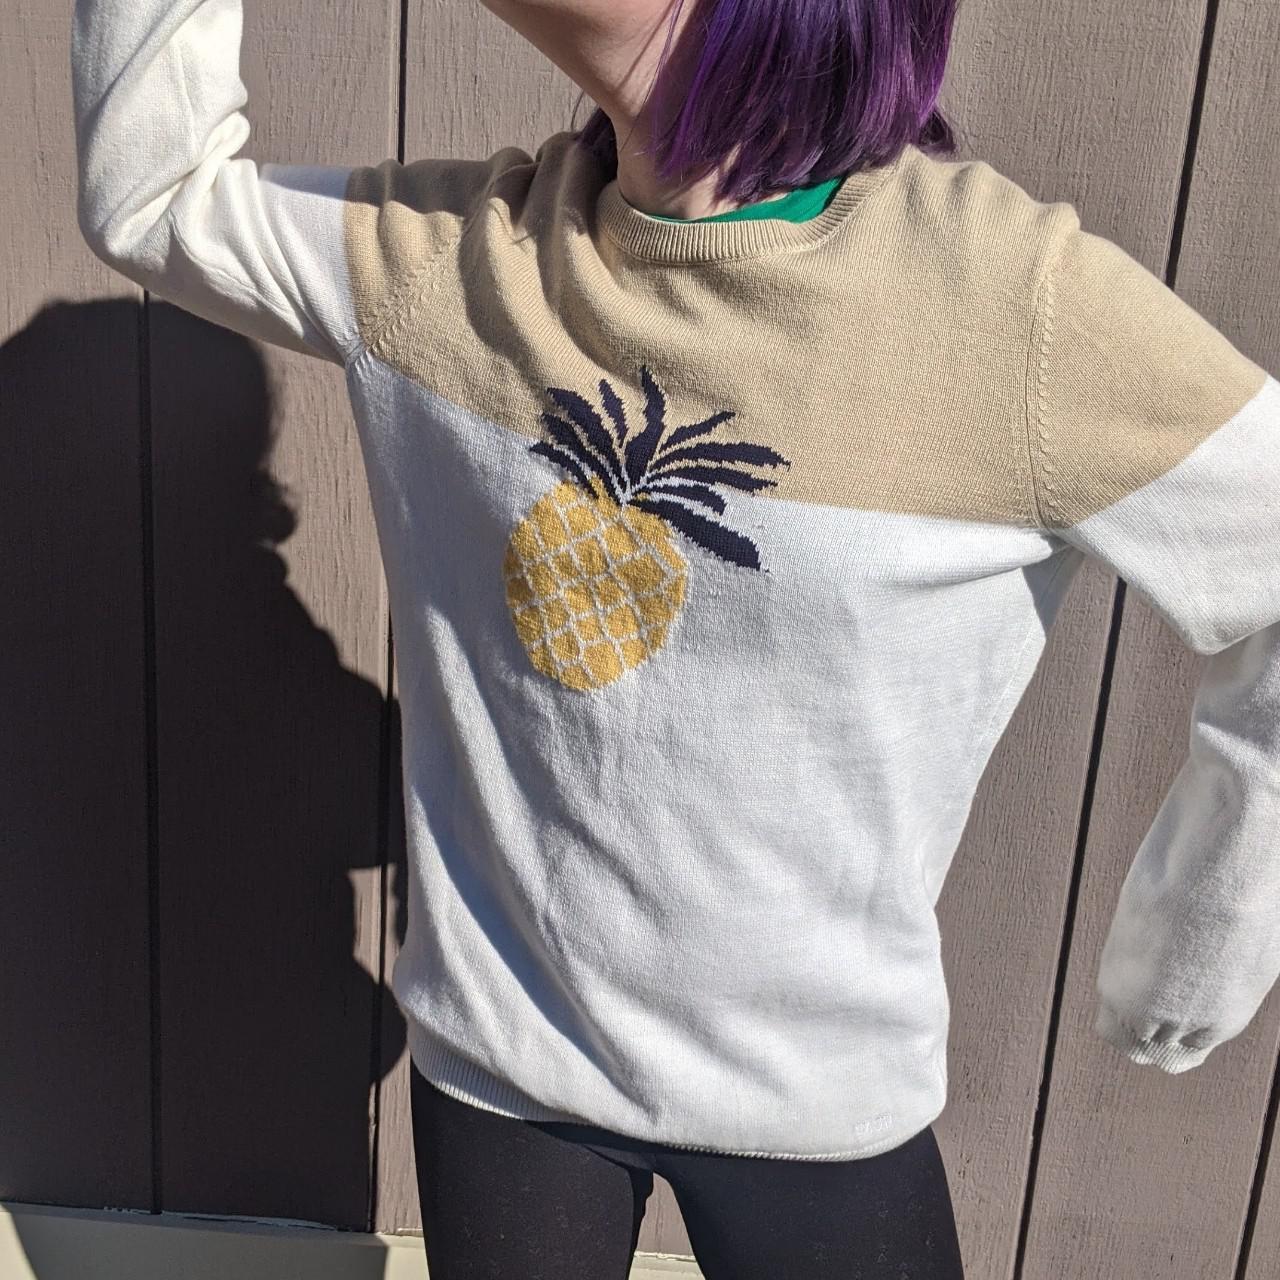 Product Image 2 - Izod pineapple sweater, vintage 90's